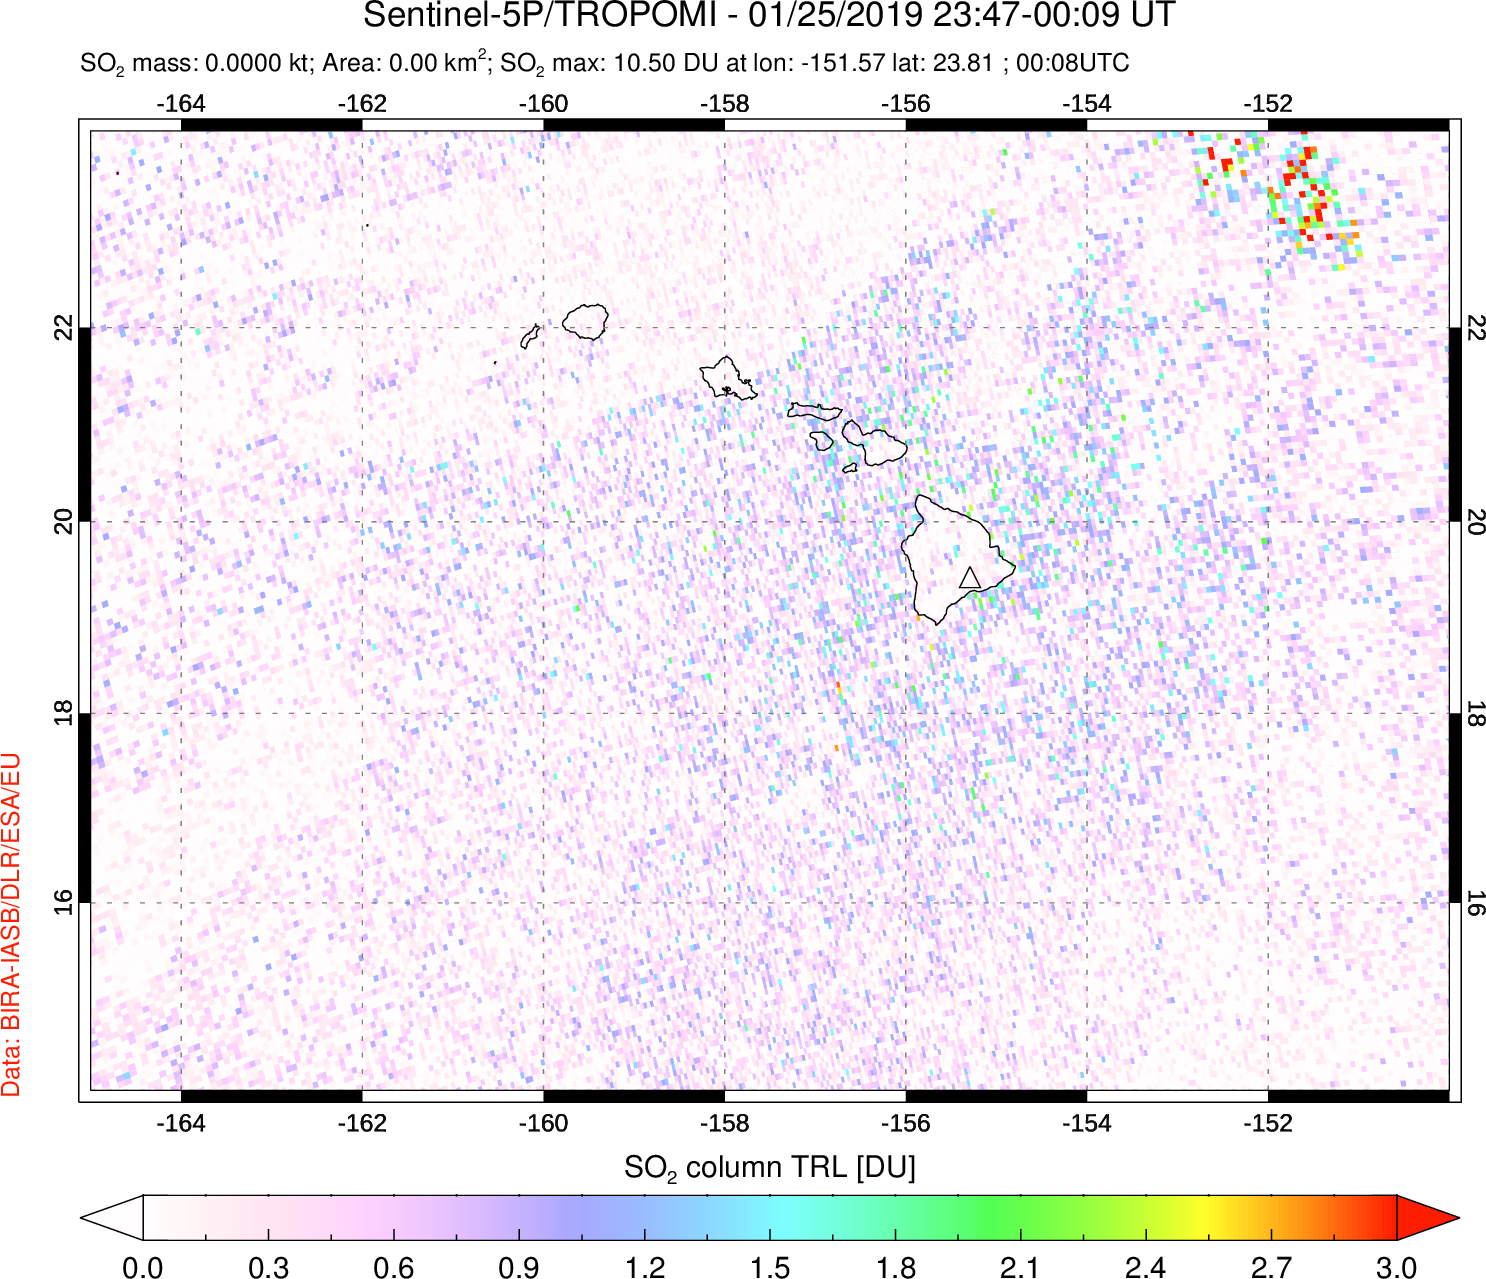 A sulfur dioxide image over Hawaii, USA on Jan 25, 2019.